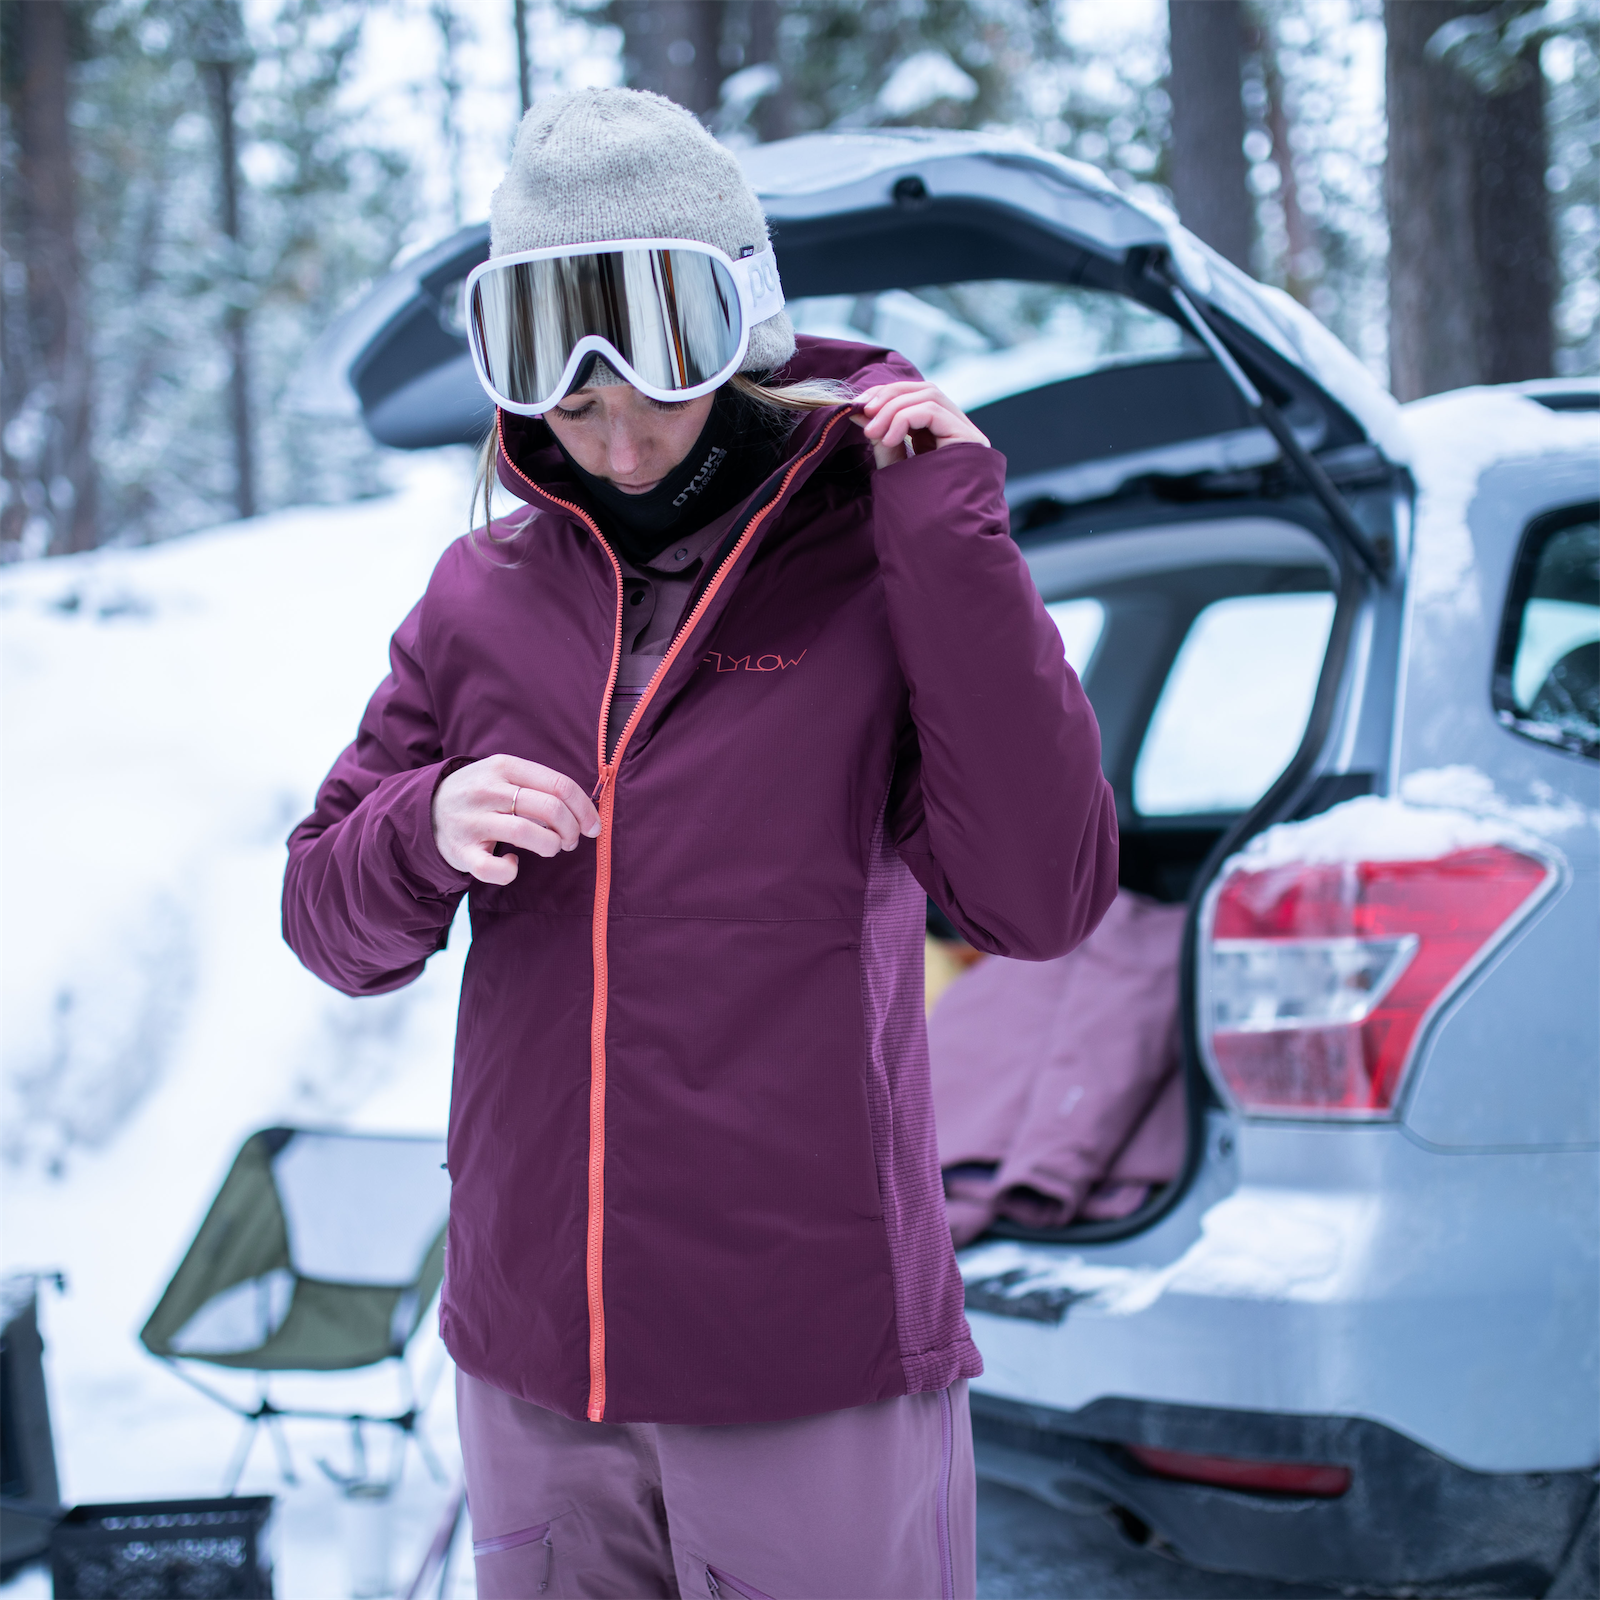 Vector Jacket - Men's Insulated Ski Jacket – Flylow Gear